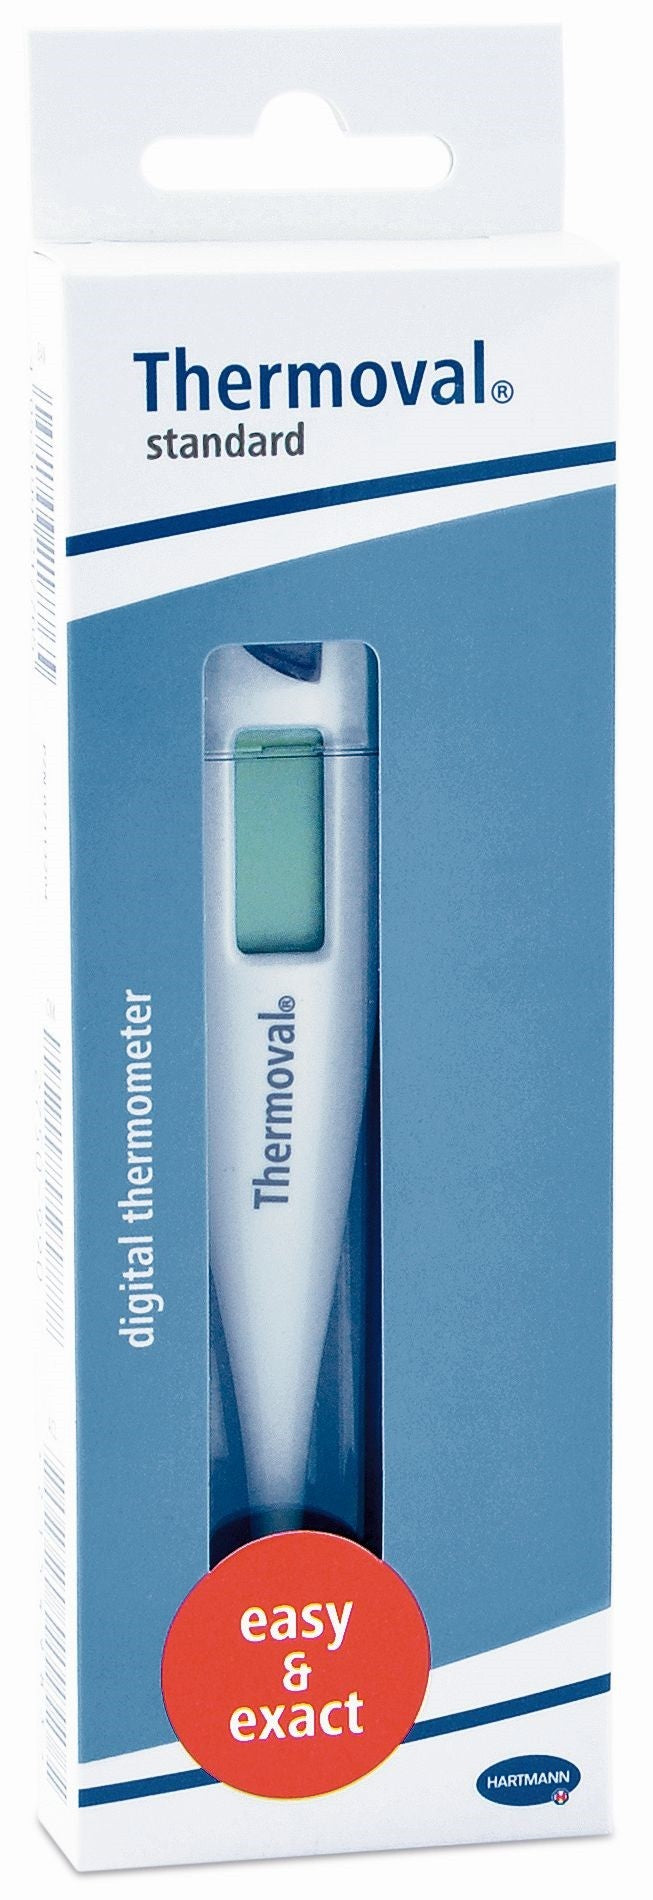 Thermomètre numérique standard Thermoval